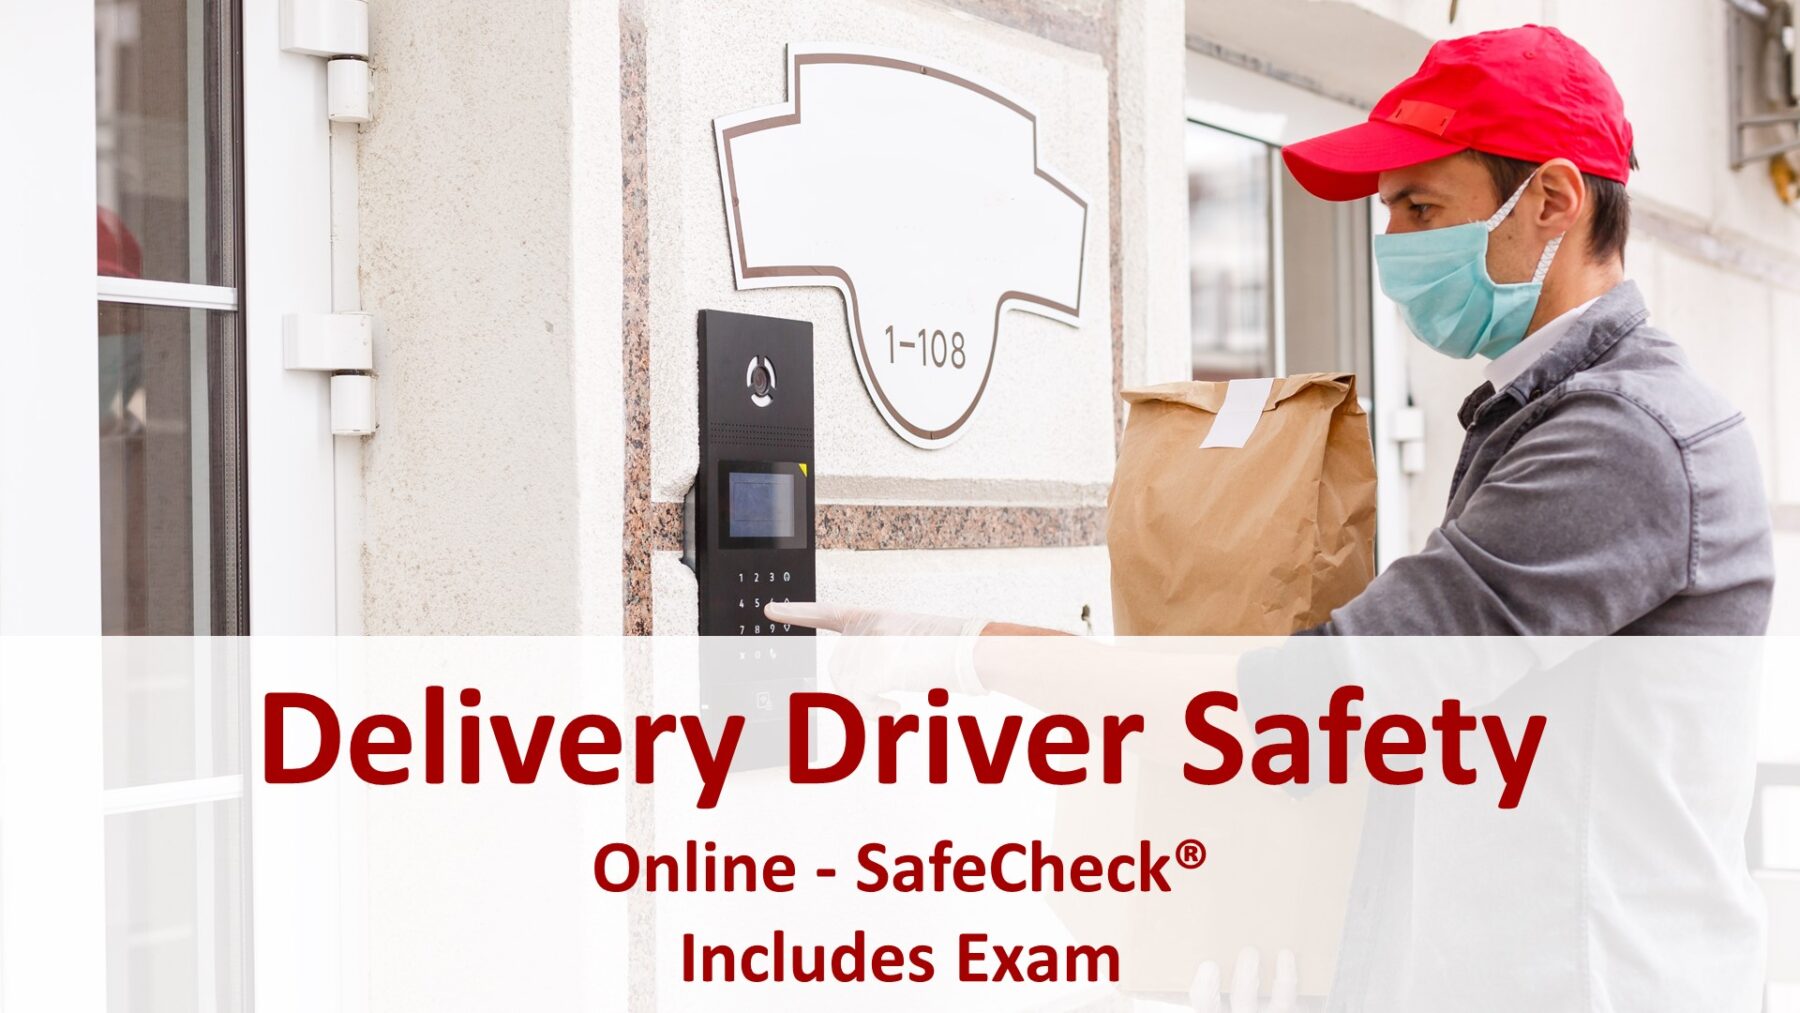 SafeCheck Delivery Driver Safety